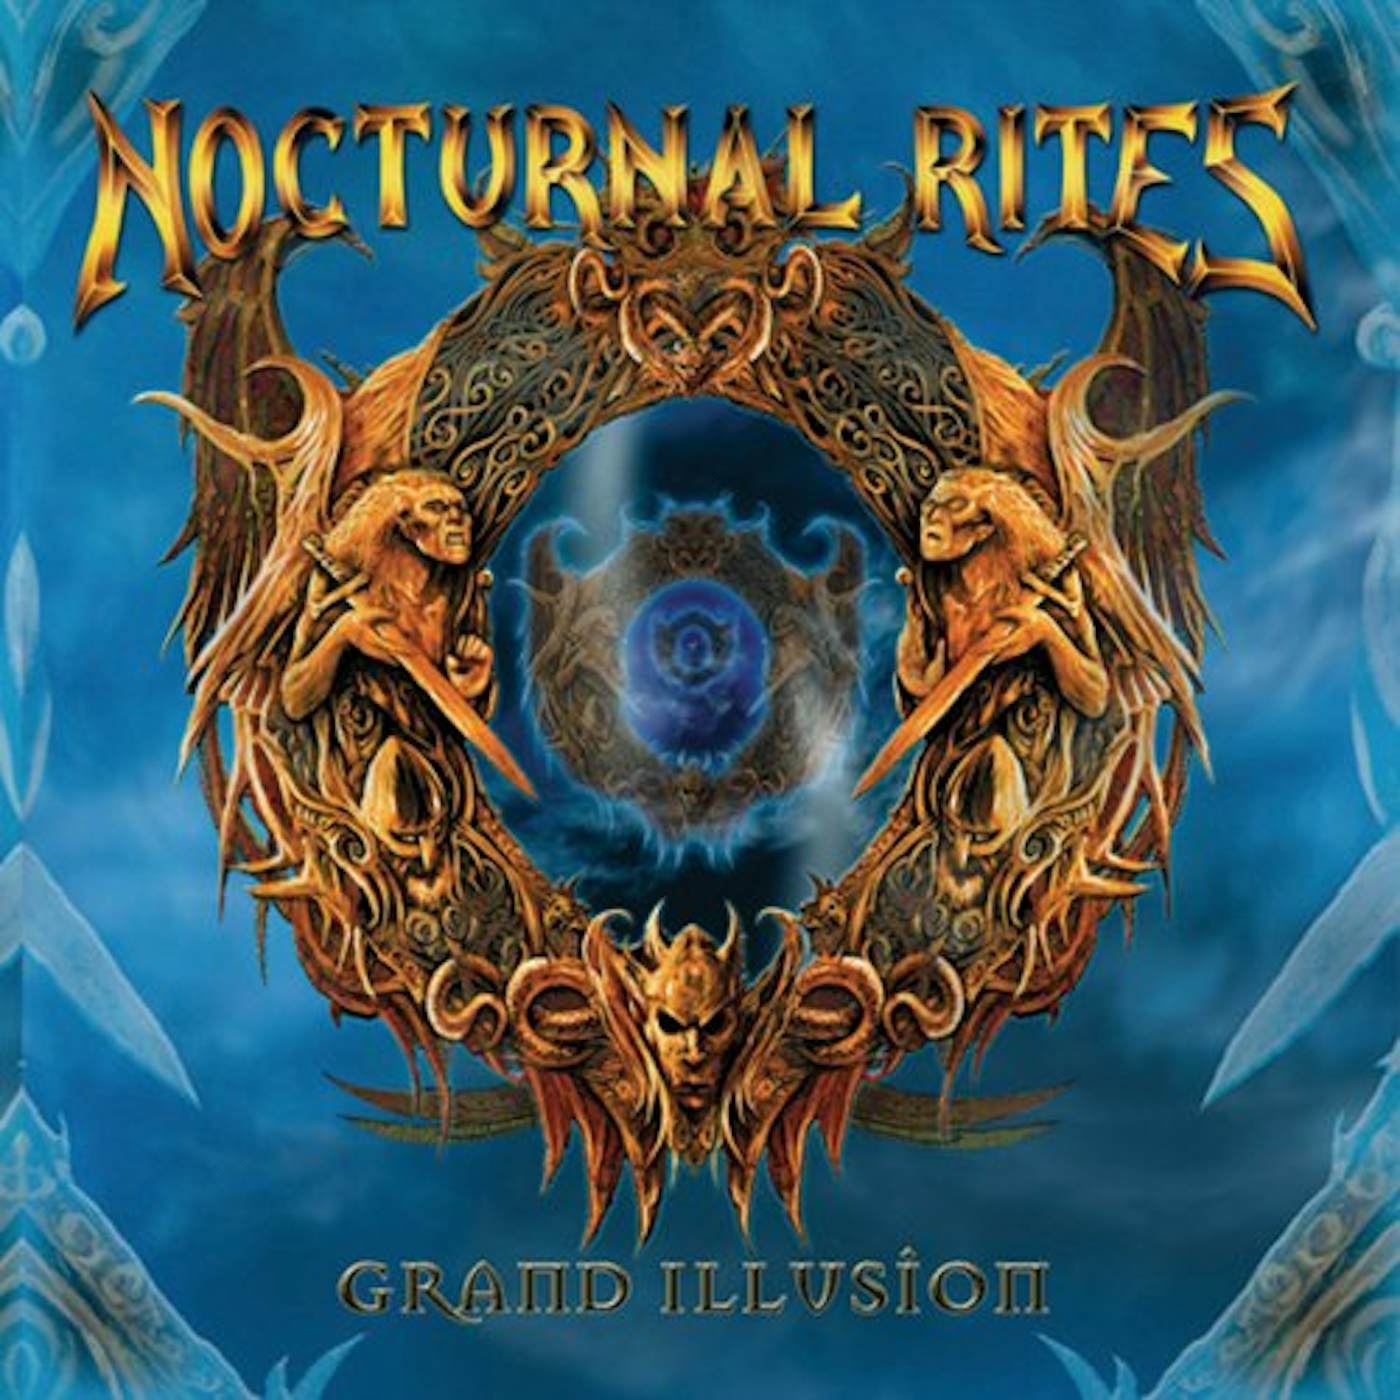 Nocturnal Rites Grand Illusion Vinyl Record